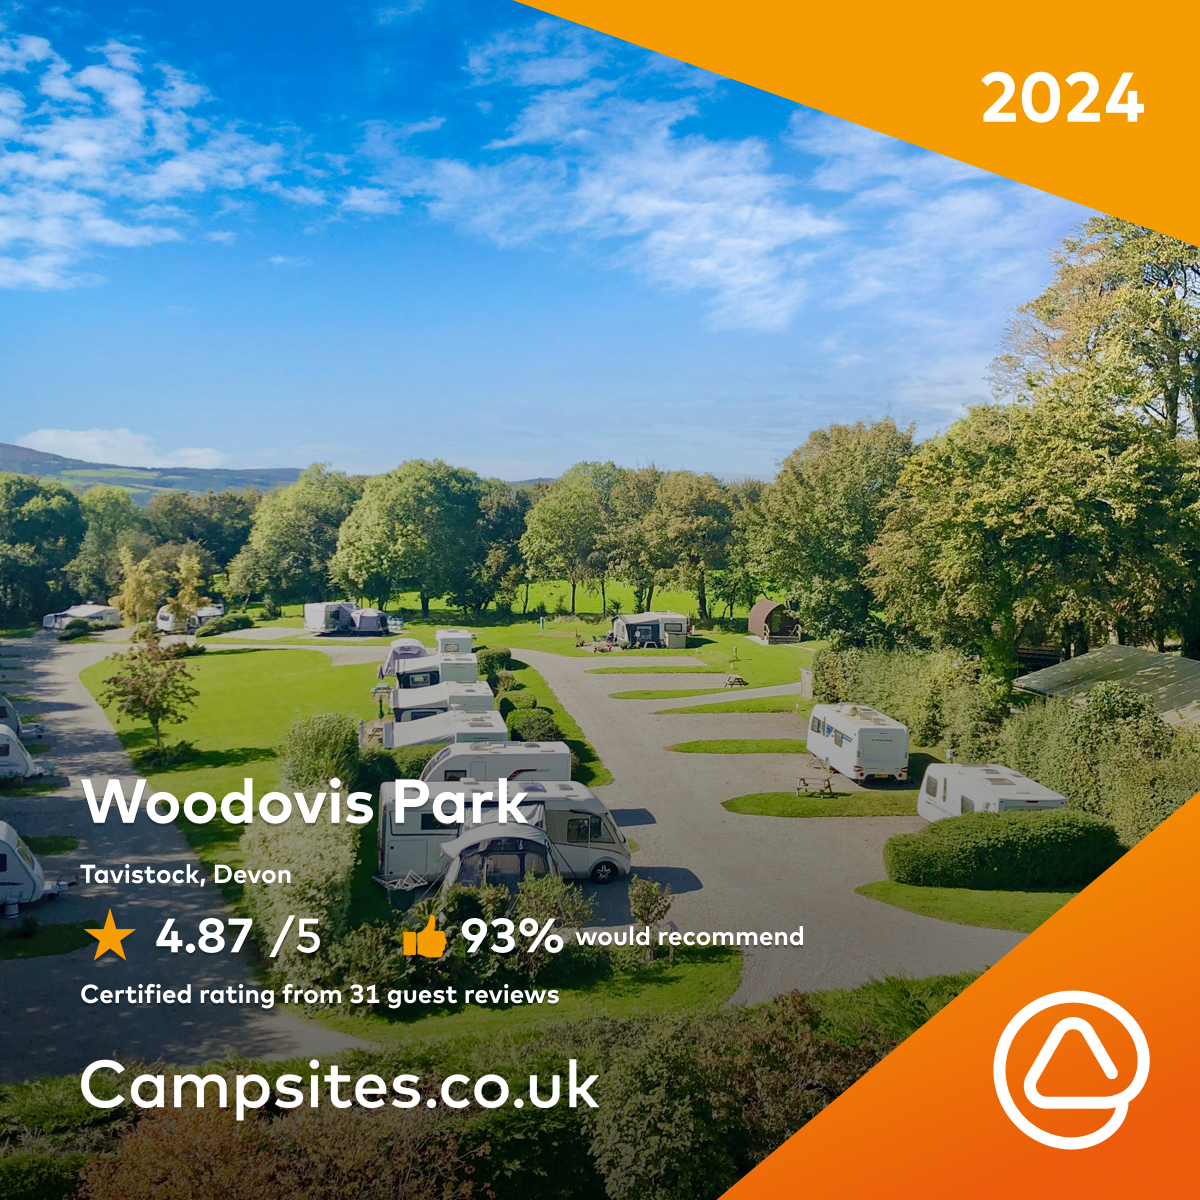 Campsites.co.uk certificate rating